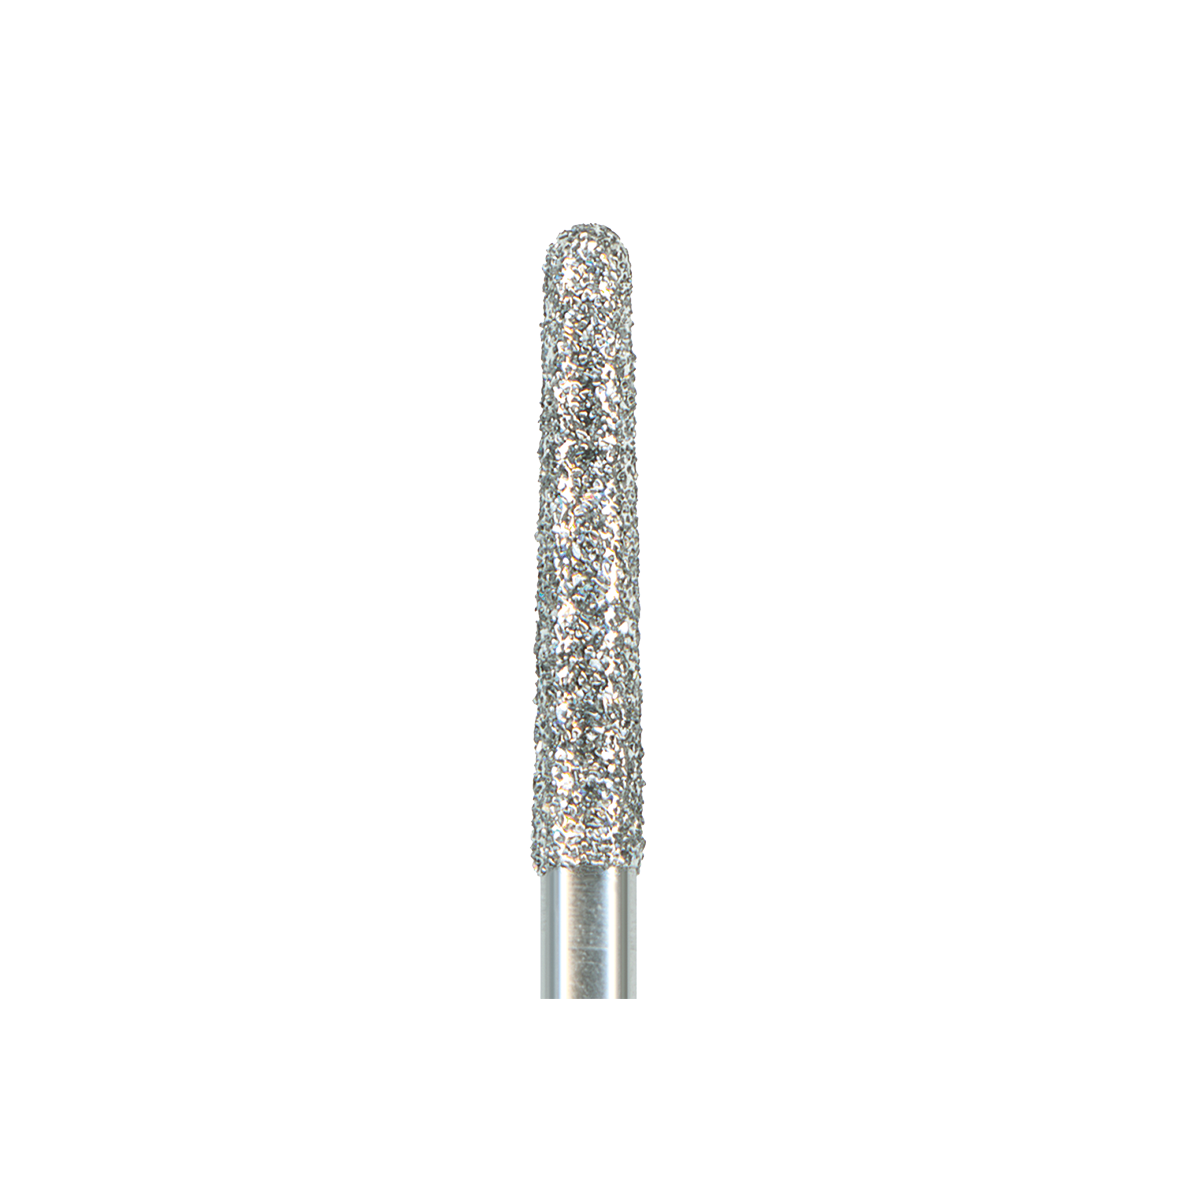 Diamantschleifer – FG 850.018A